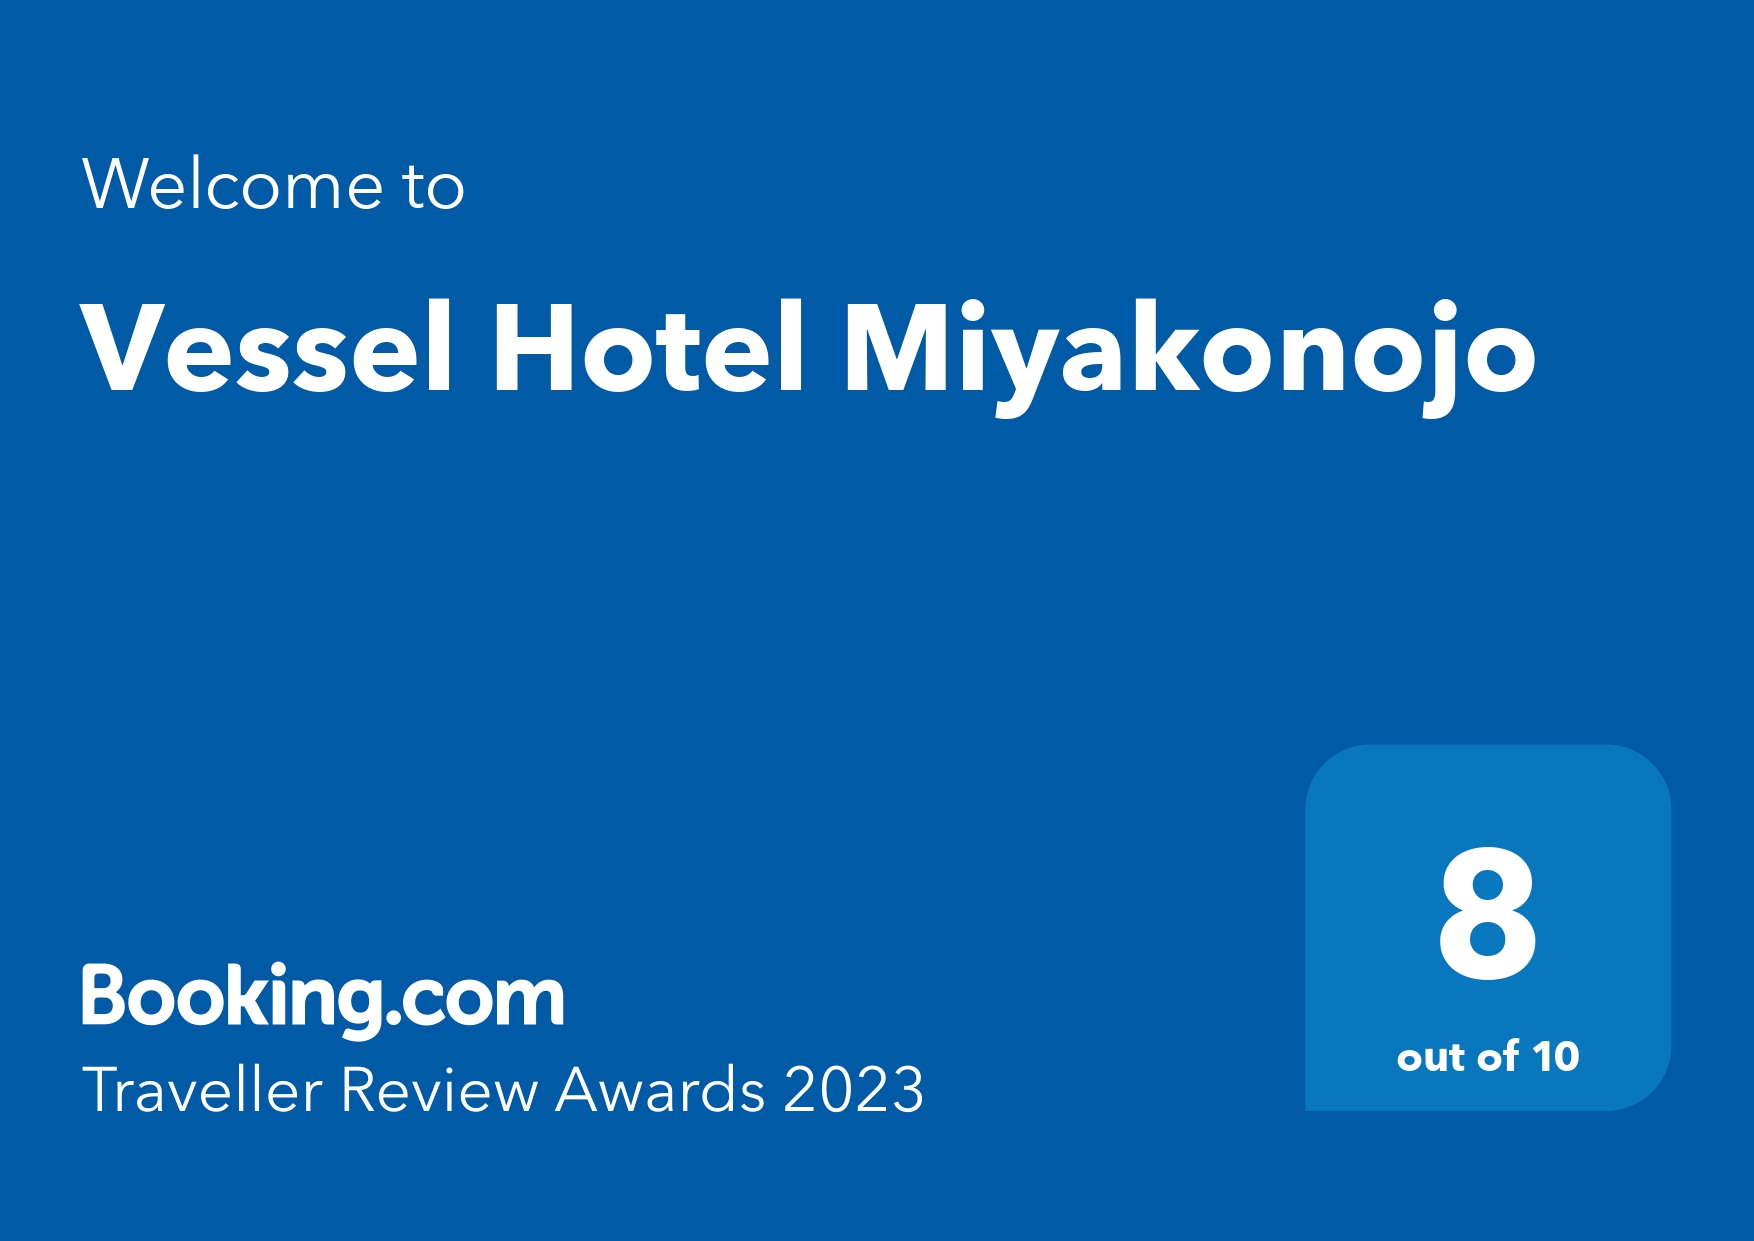 Booking.com<br>Winner of Traveler Review Awards 2023